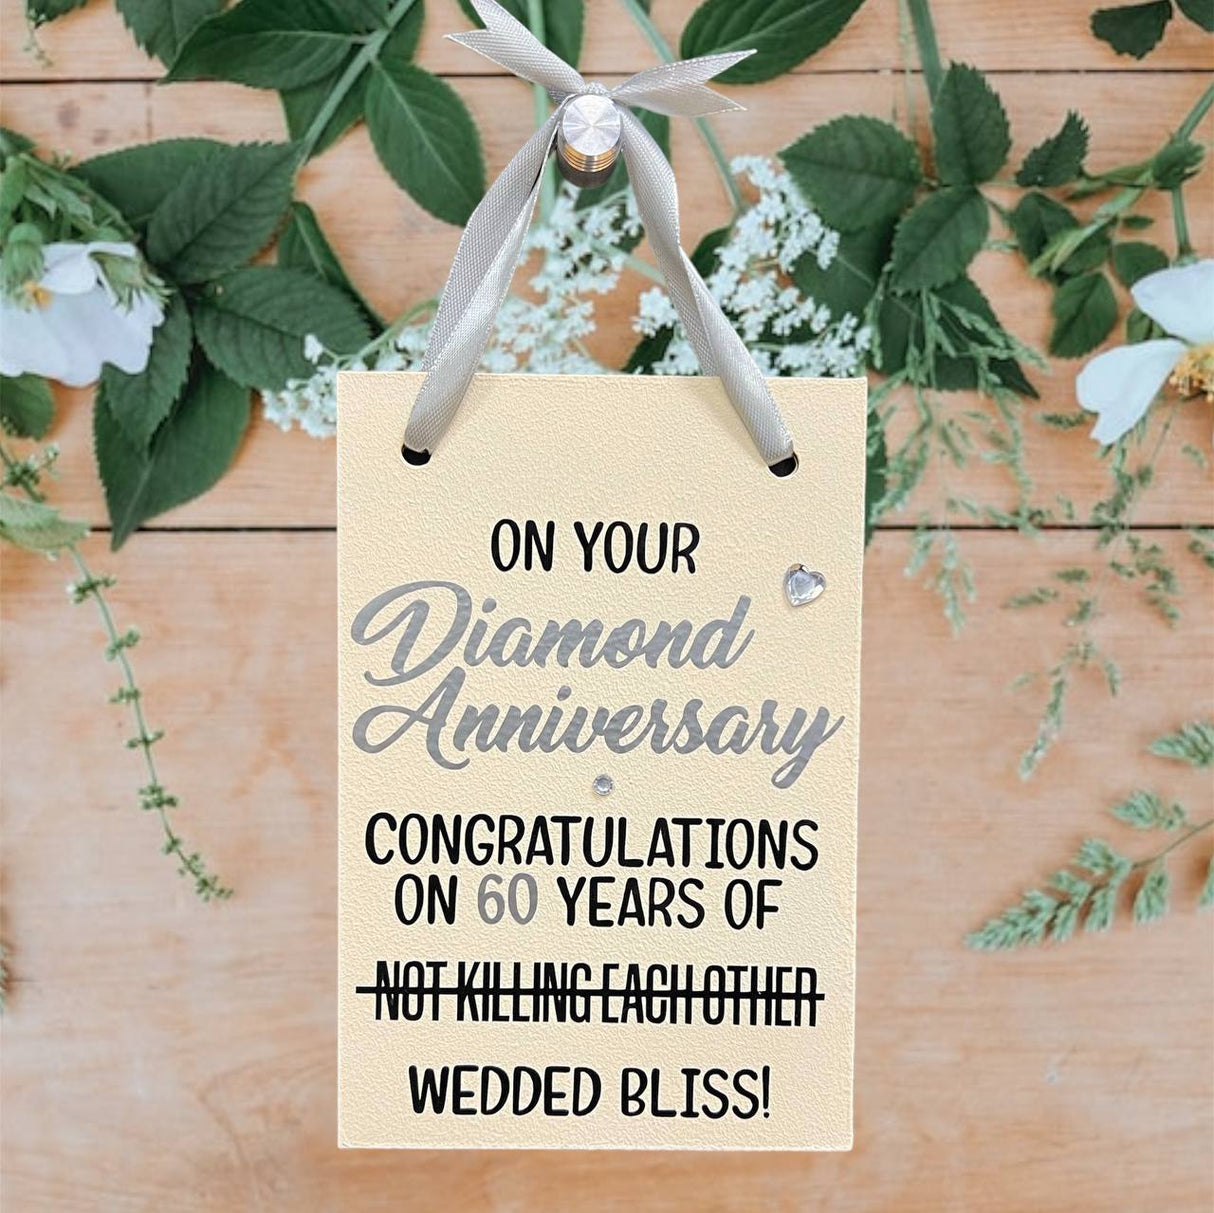 Diamond Anniversary - Wedded Bliss!